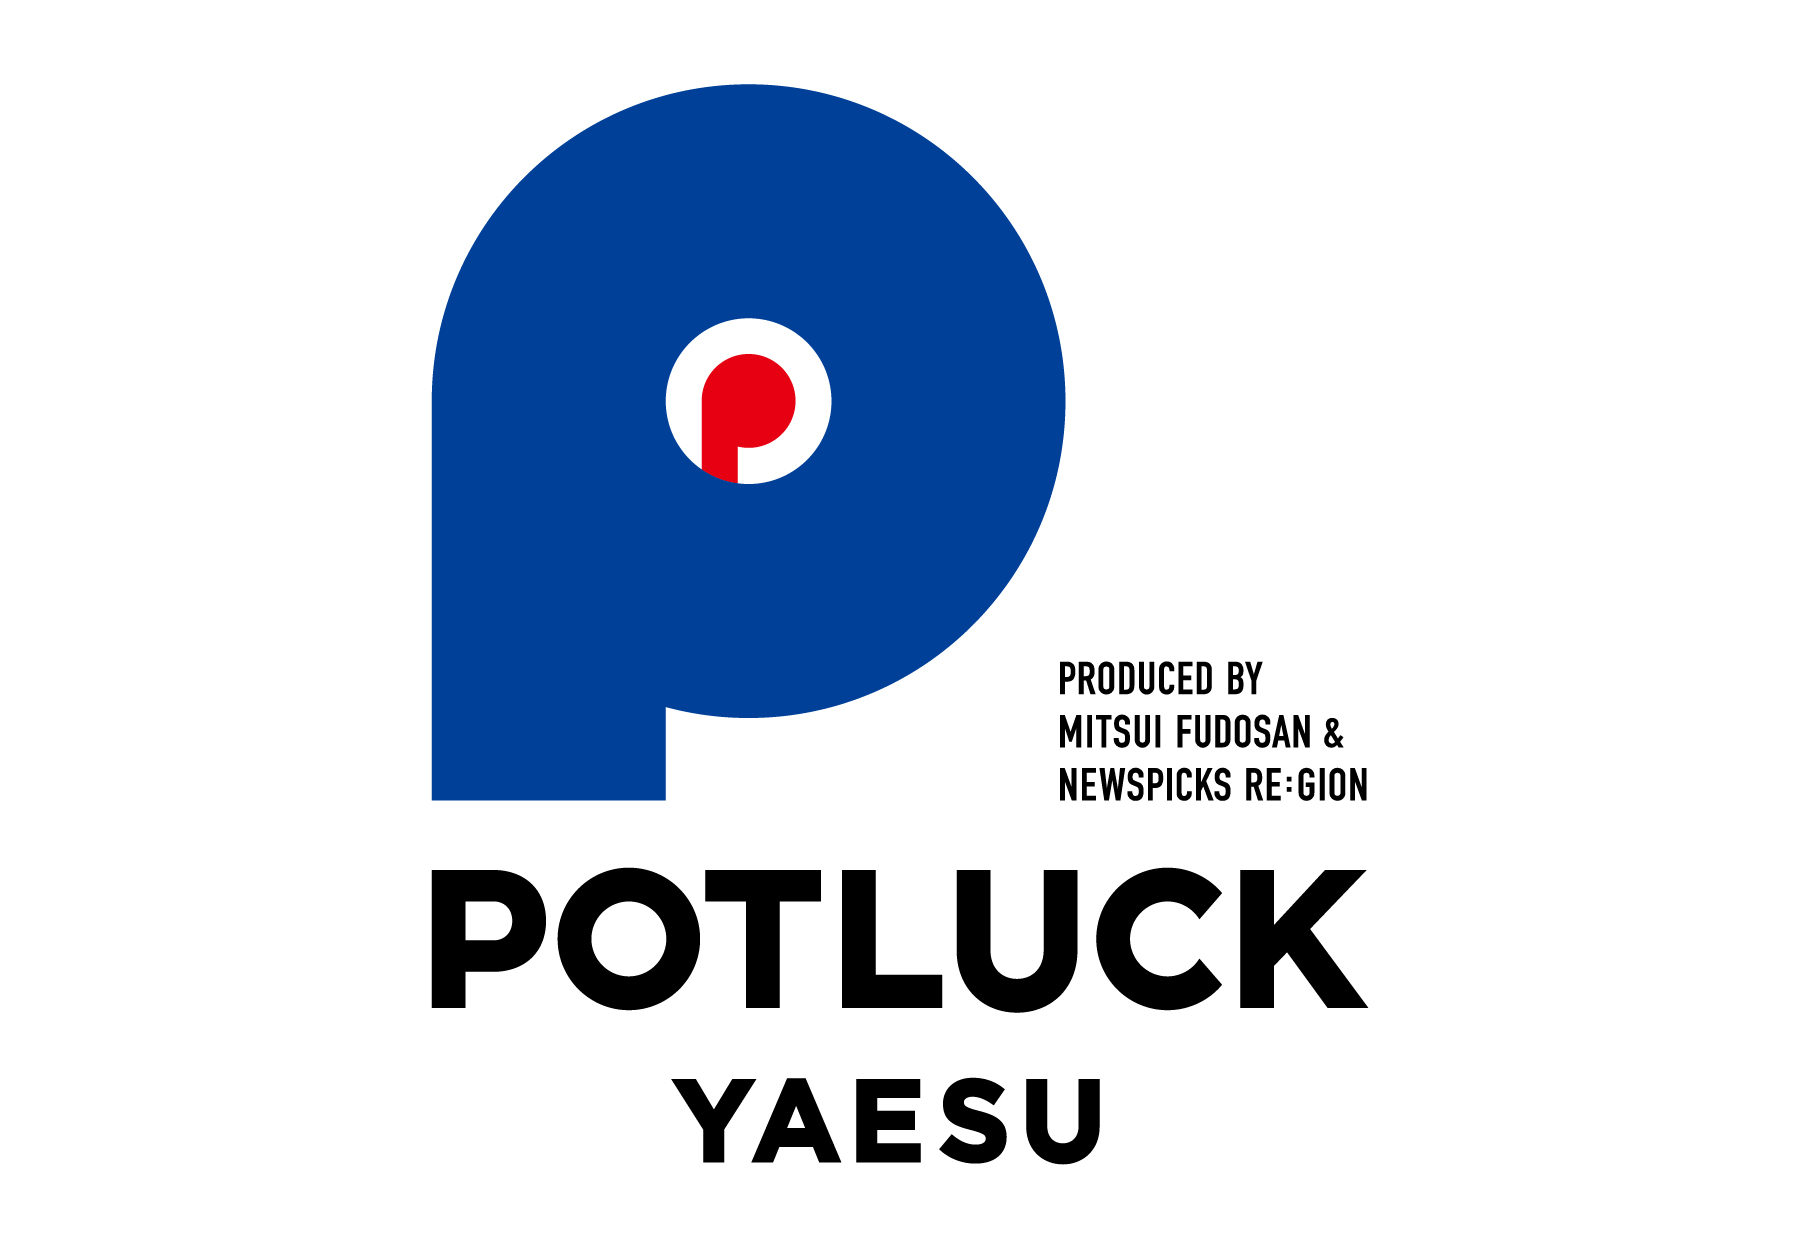 「POTLUCK YAESU」のアイキャッチ画像